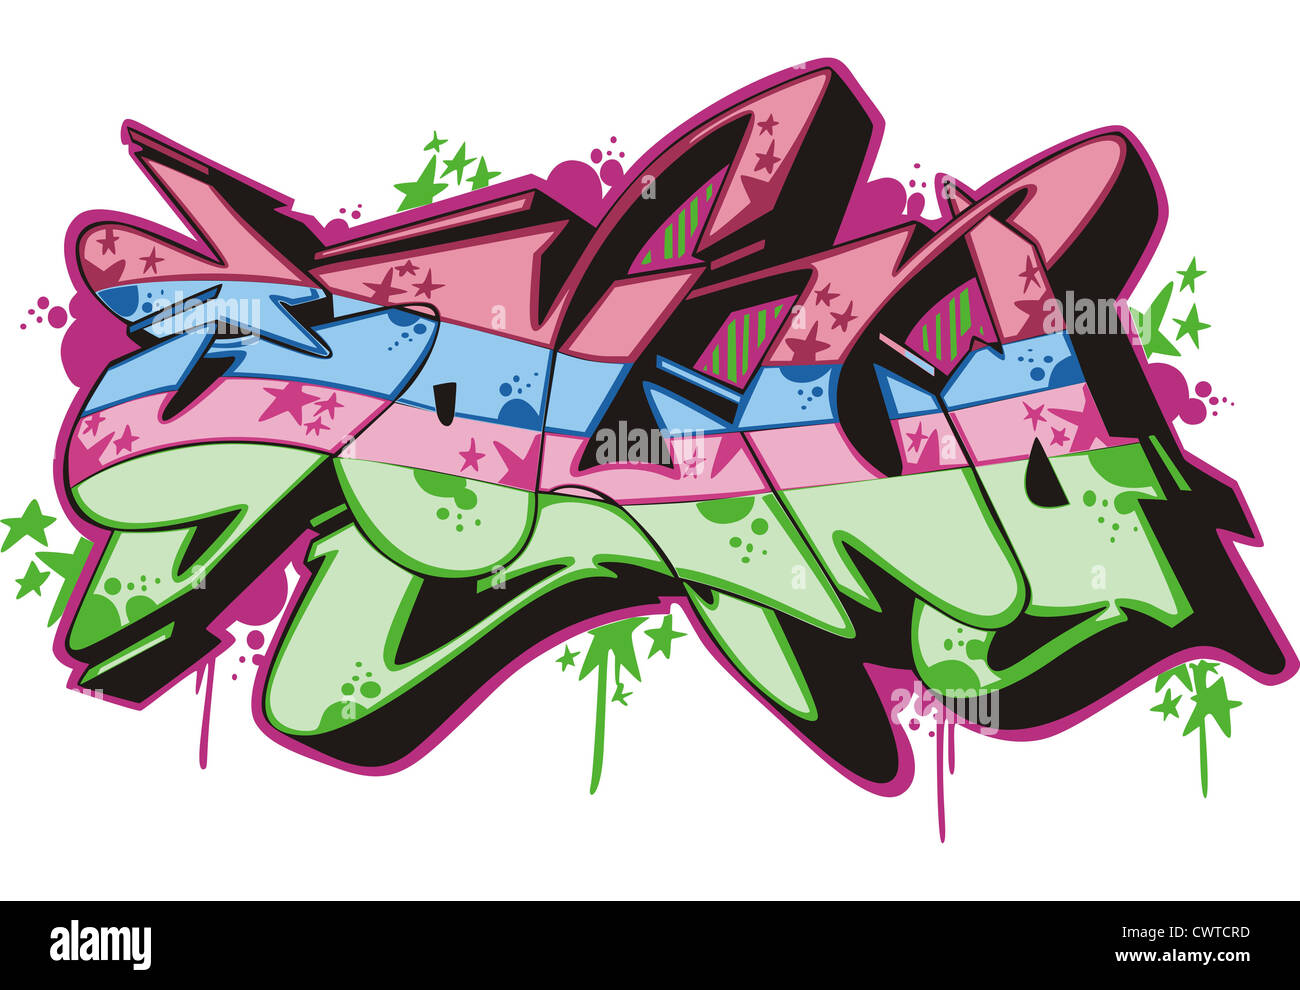 Graffito text design - sound. Color vector illustration Stock Photo - Alamy